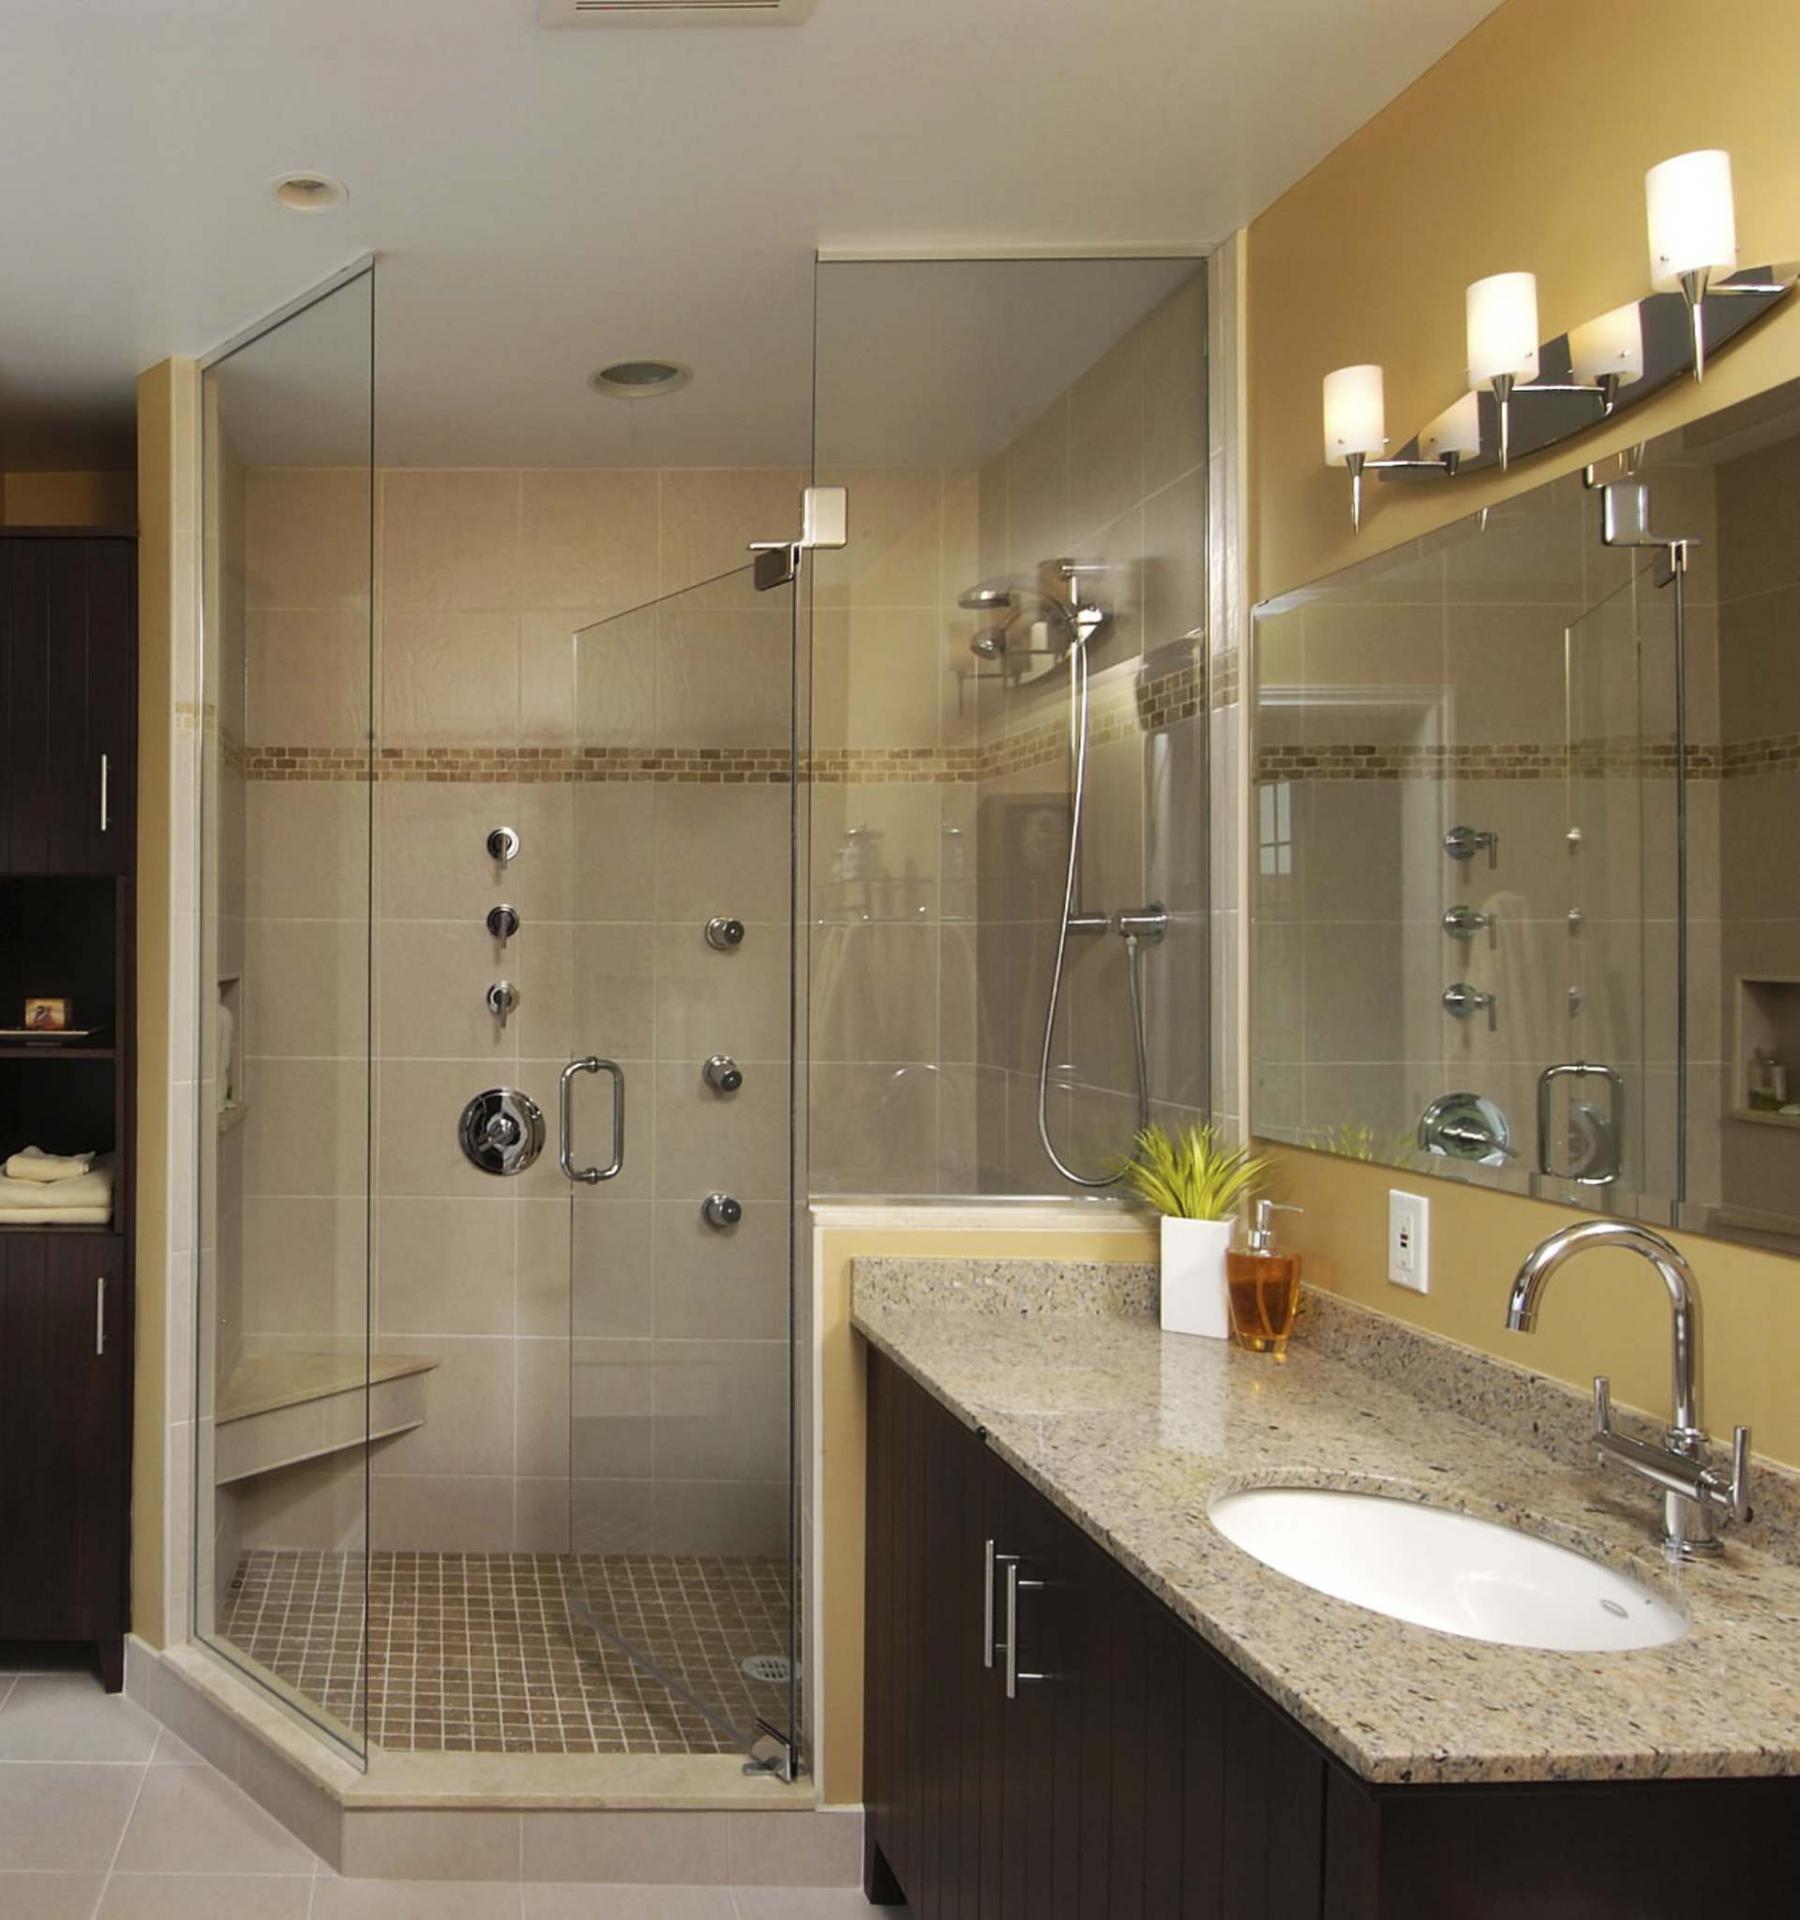 Simple Homemade Shower Cleaner Works Like A Charm Winnipeg Free